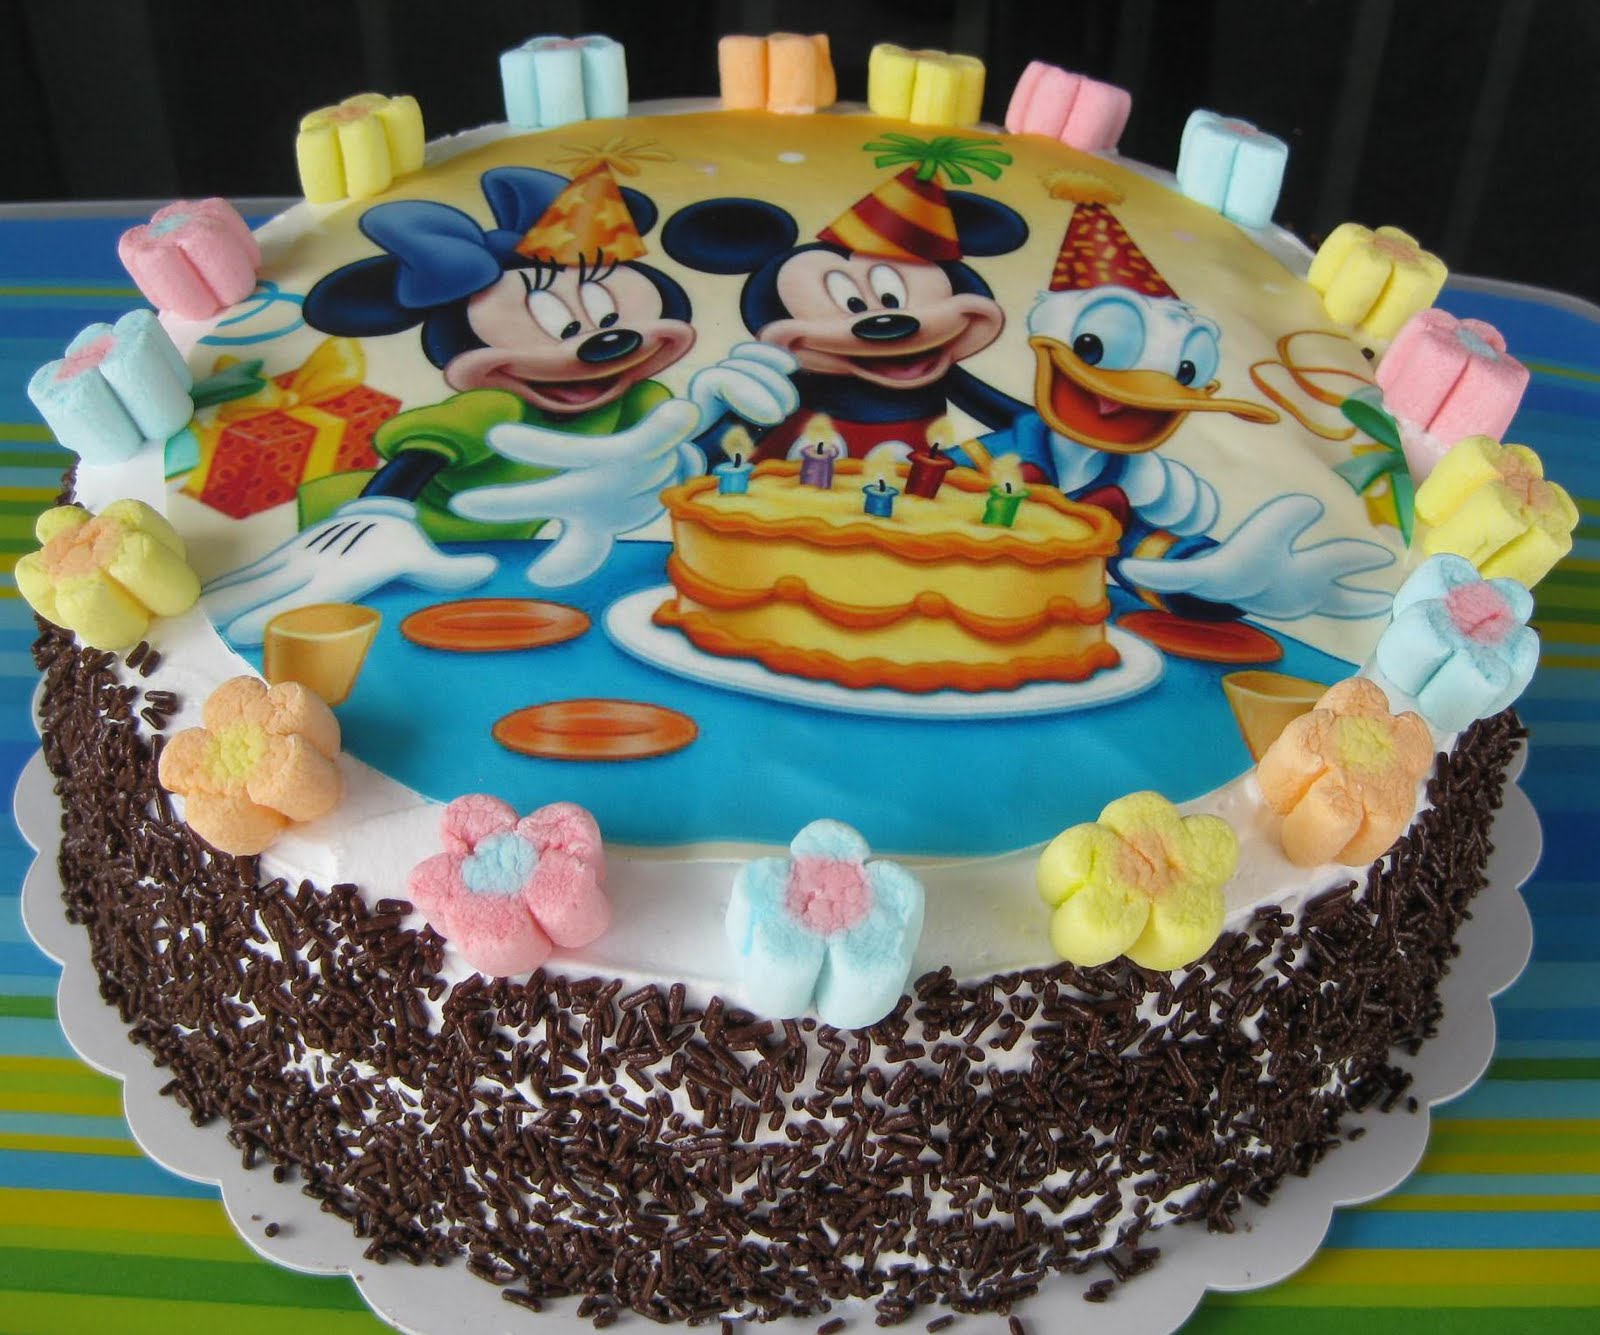 AppleBee Cake Boutique : Mickey and Friends Cake & Cupcakes 米奇老鼠蛋糕和杯子蛋糕组合